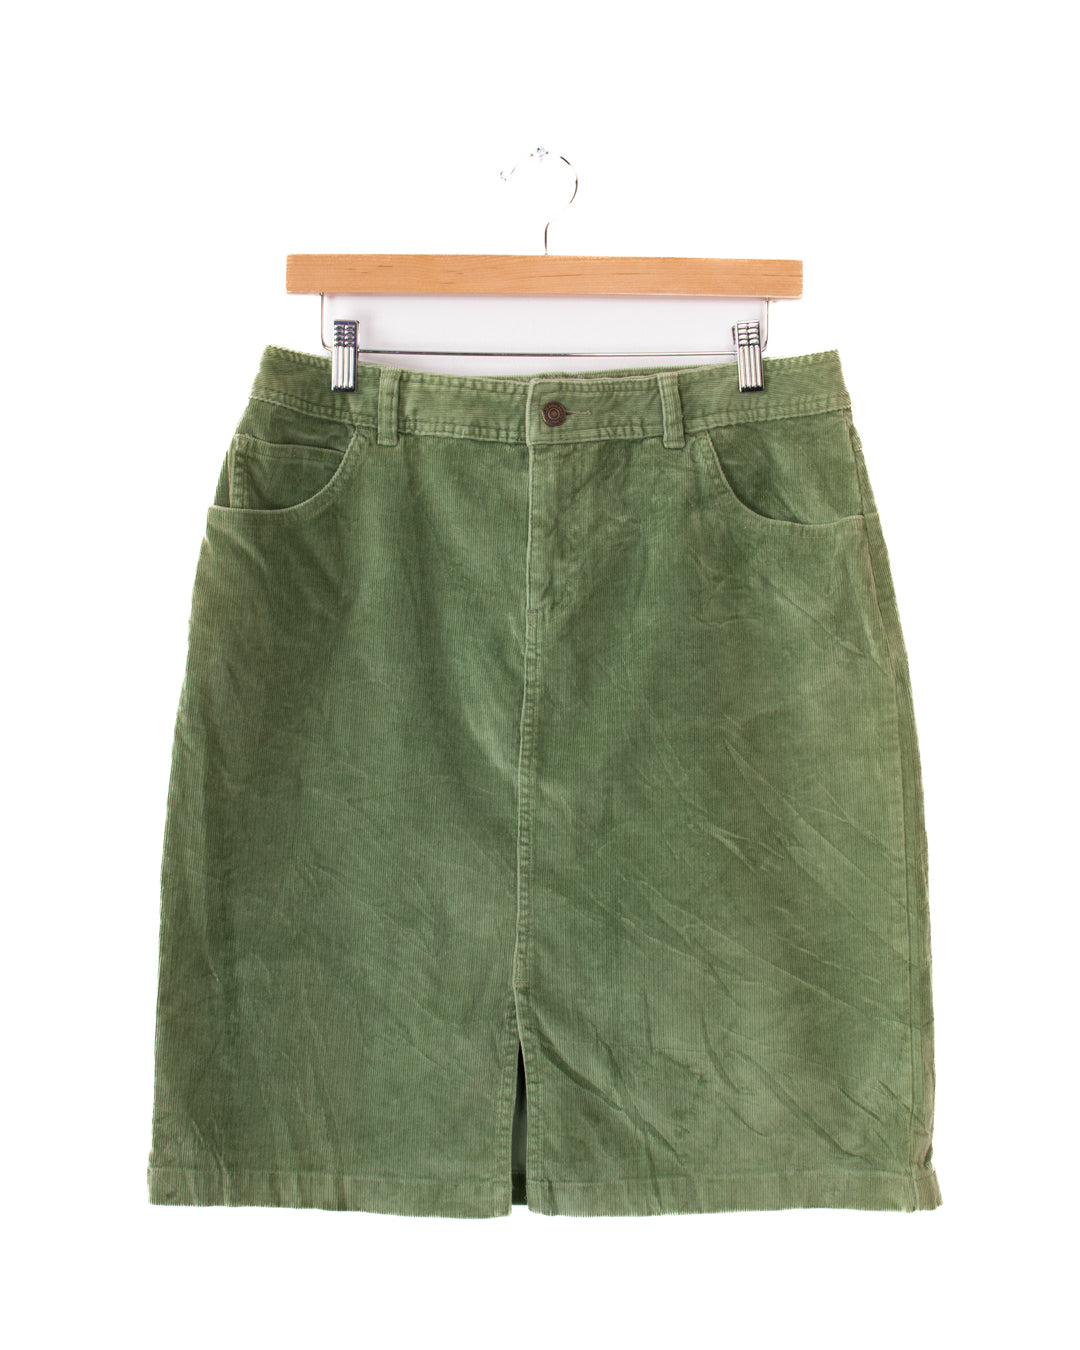 St. Johns Bay Green Corduroy Skirt